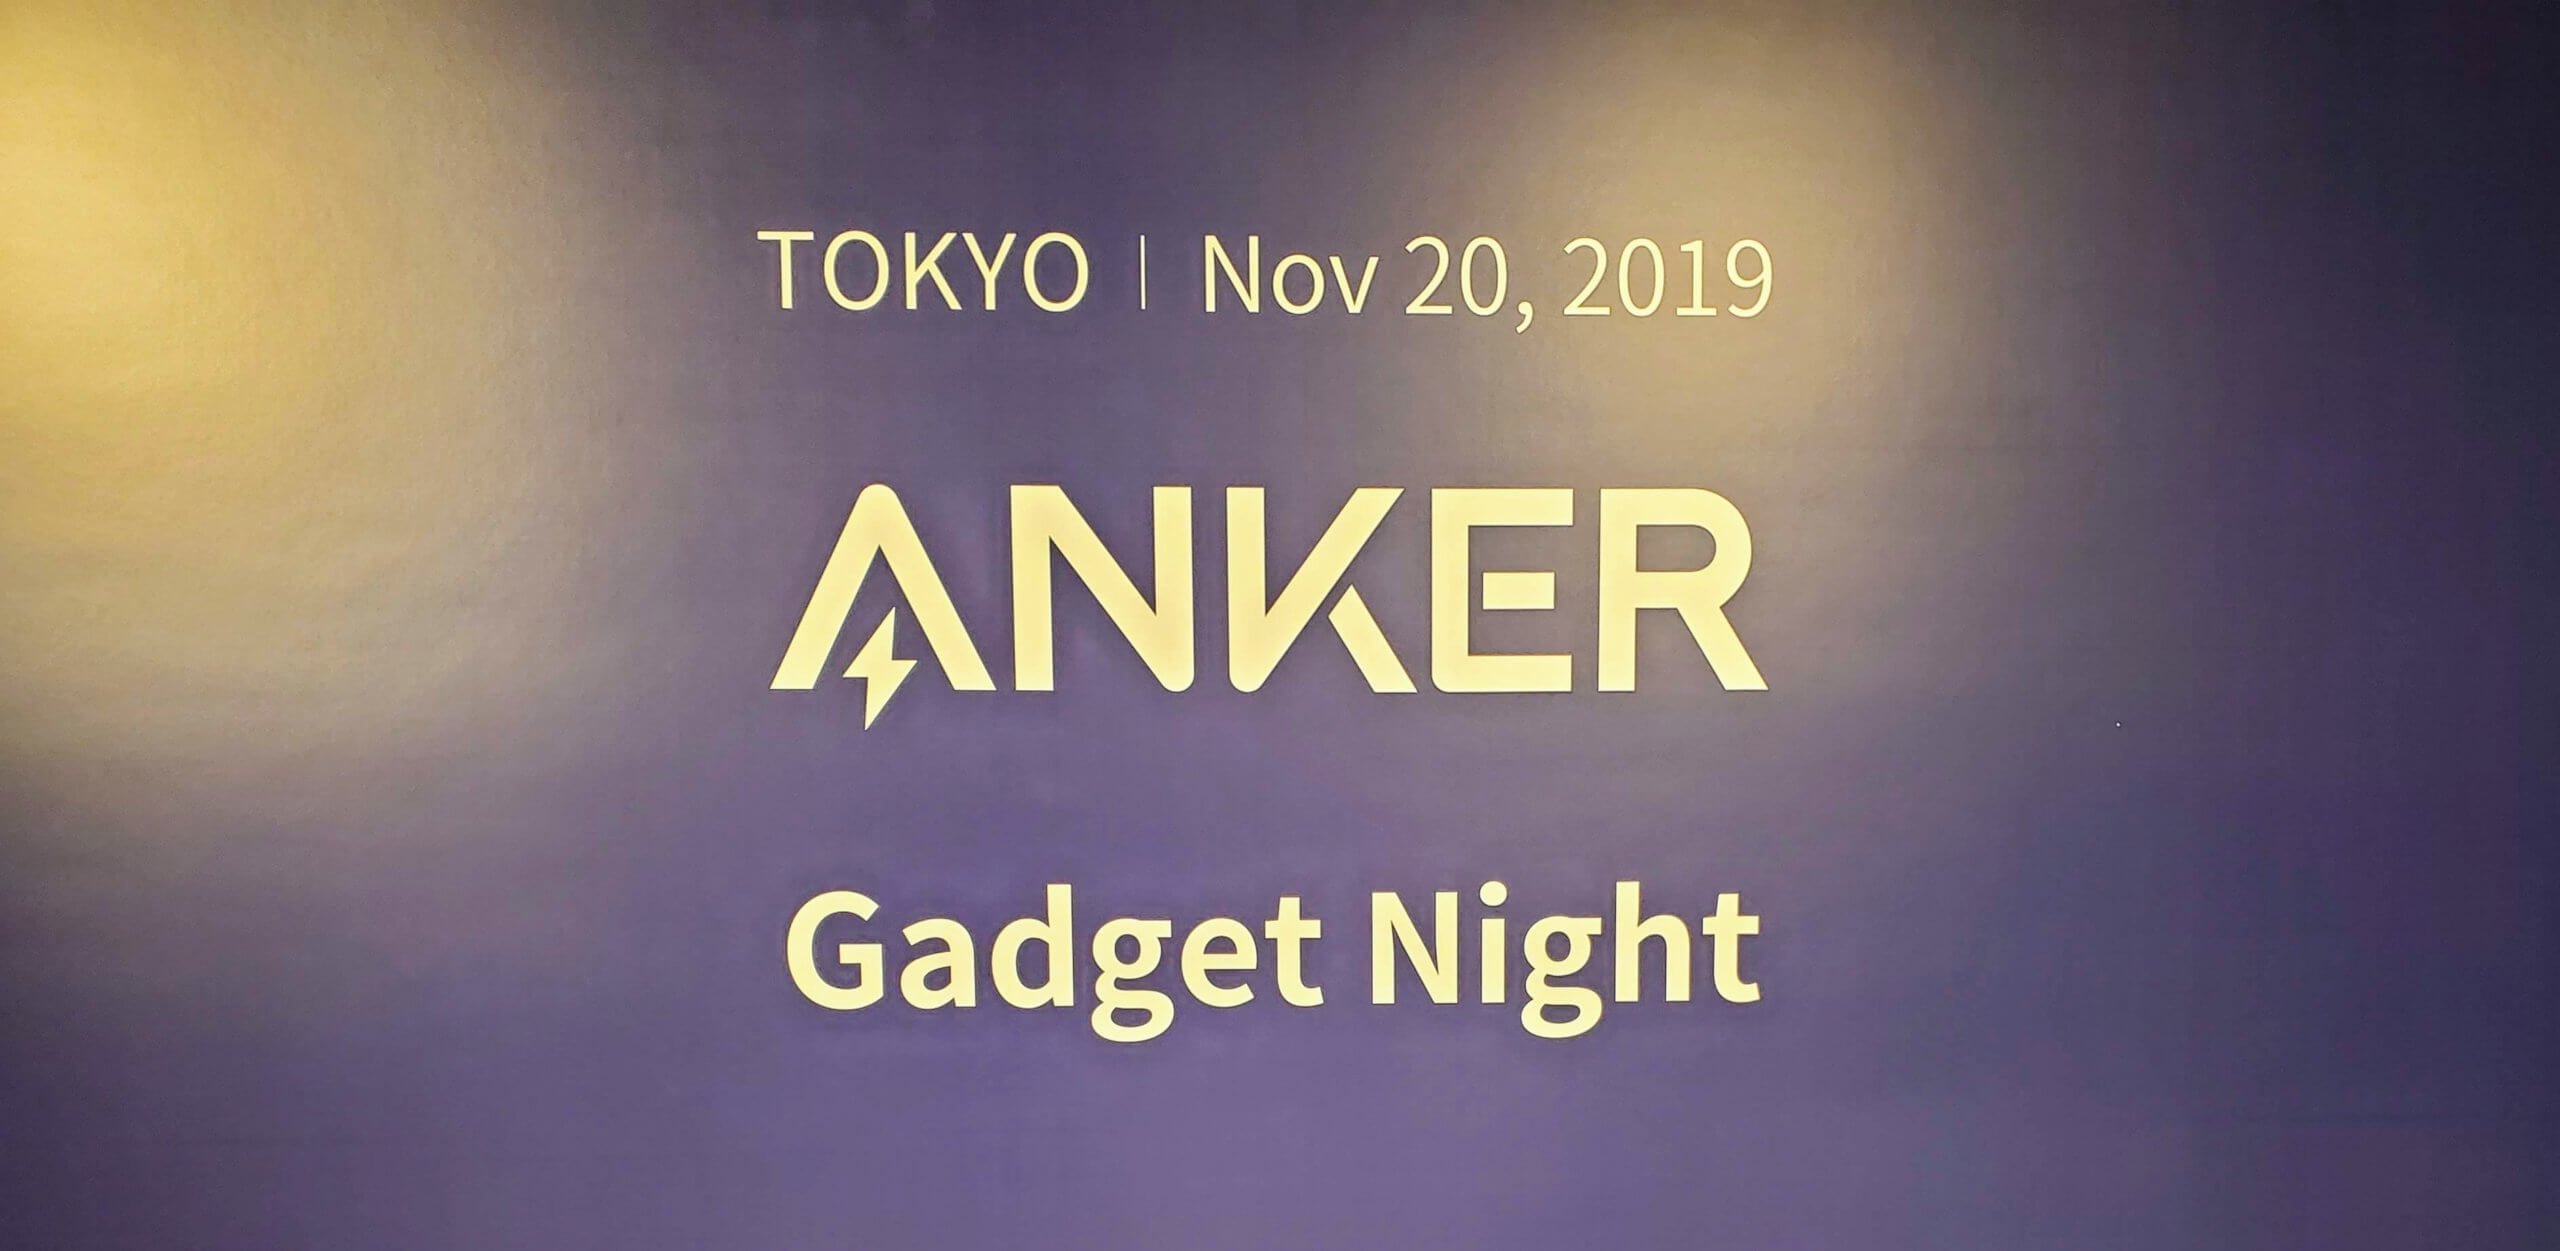 Ankerの世界初のファンイベント「Anker Gadget Night」がかなり独特